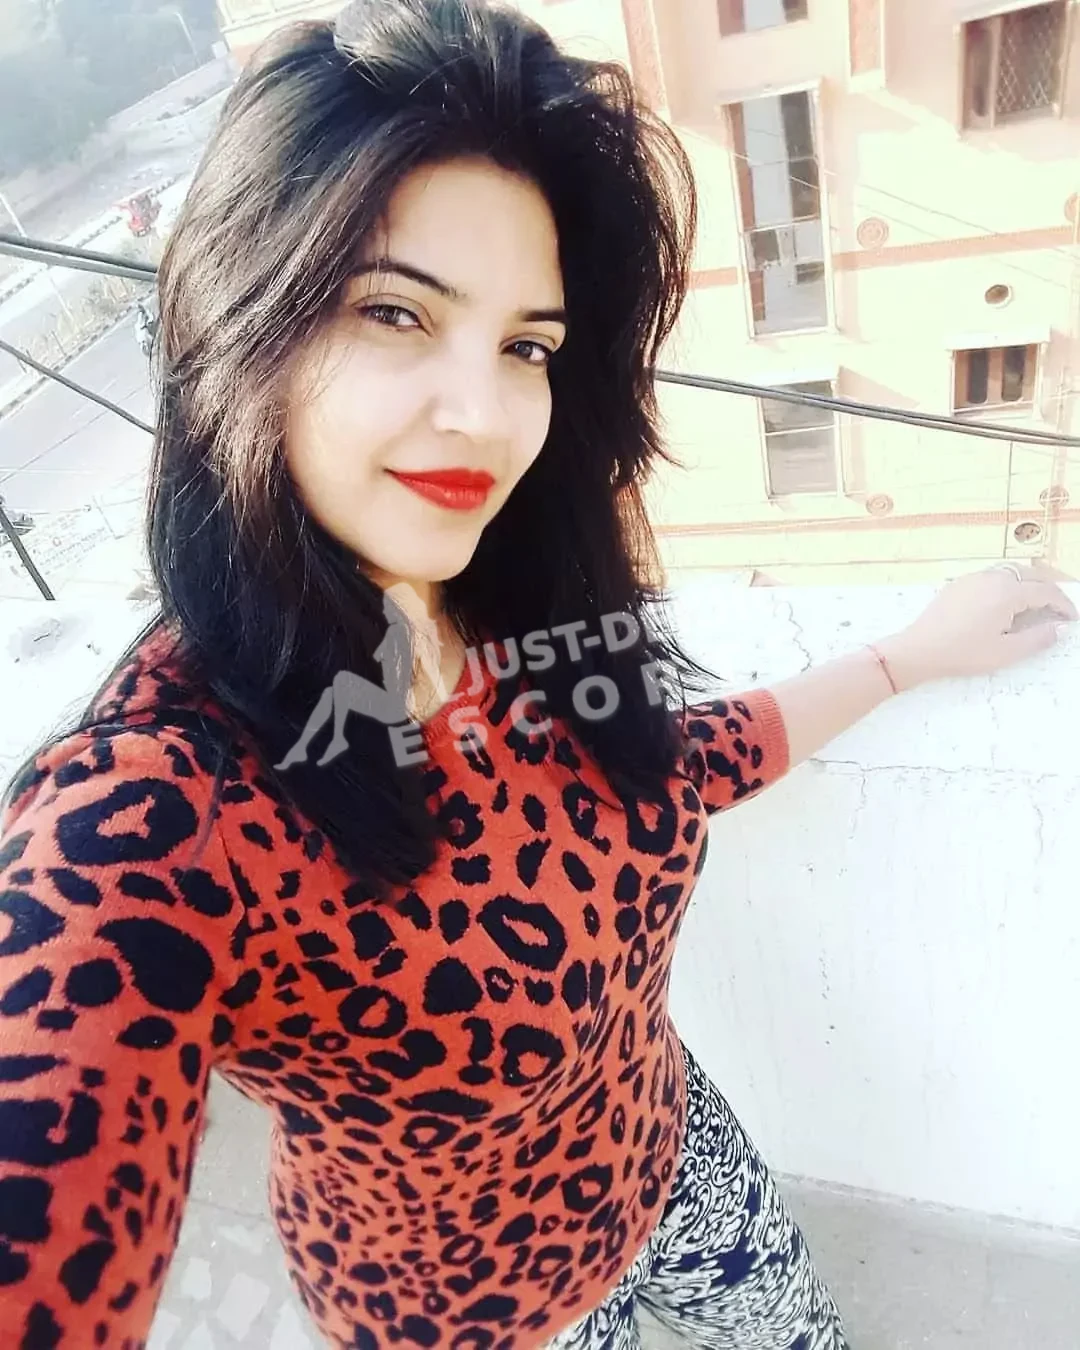 Call Girls In Faridabad Escorts In Faridabad Hot And Sexy Girls VIP Prime